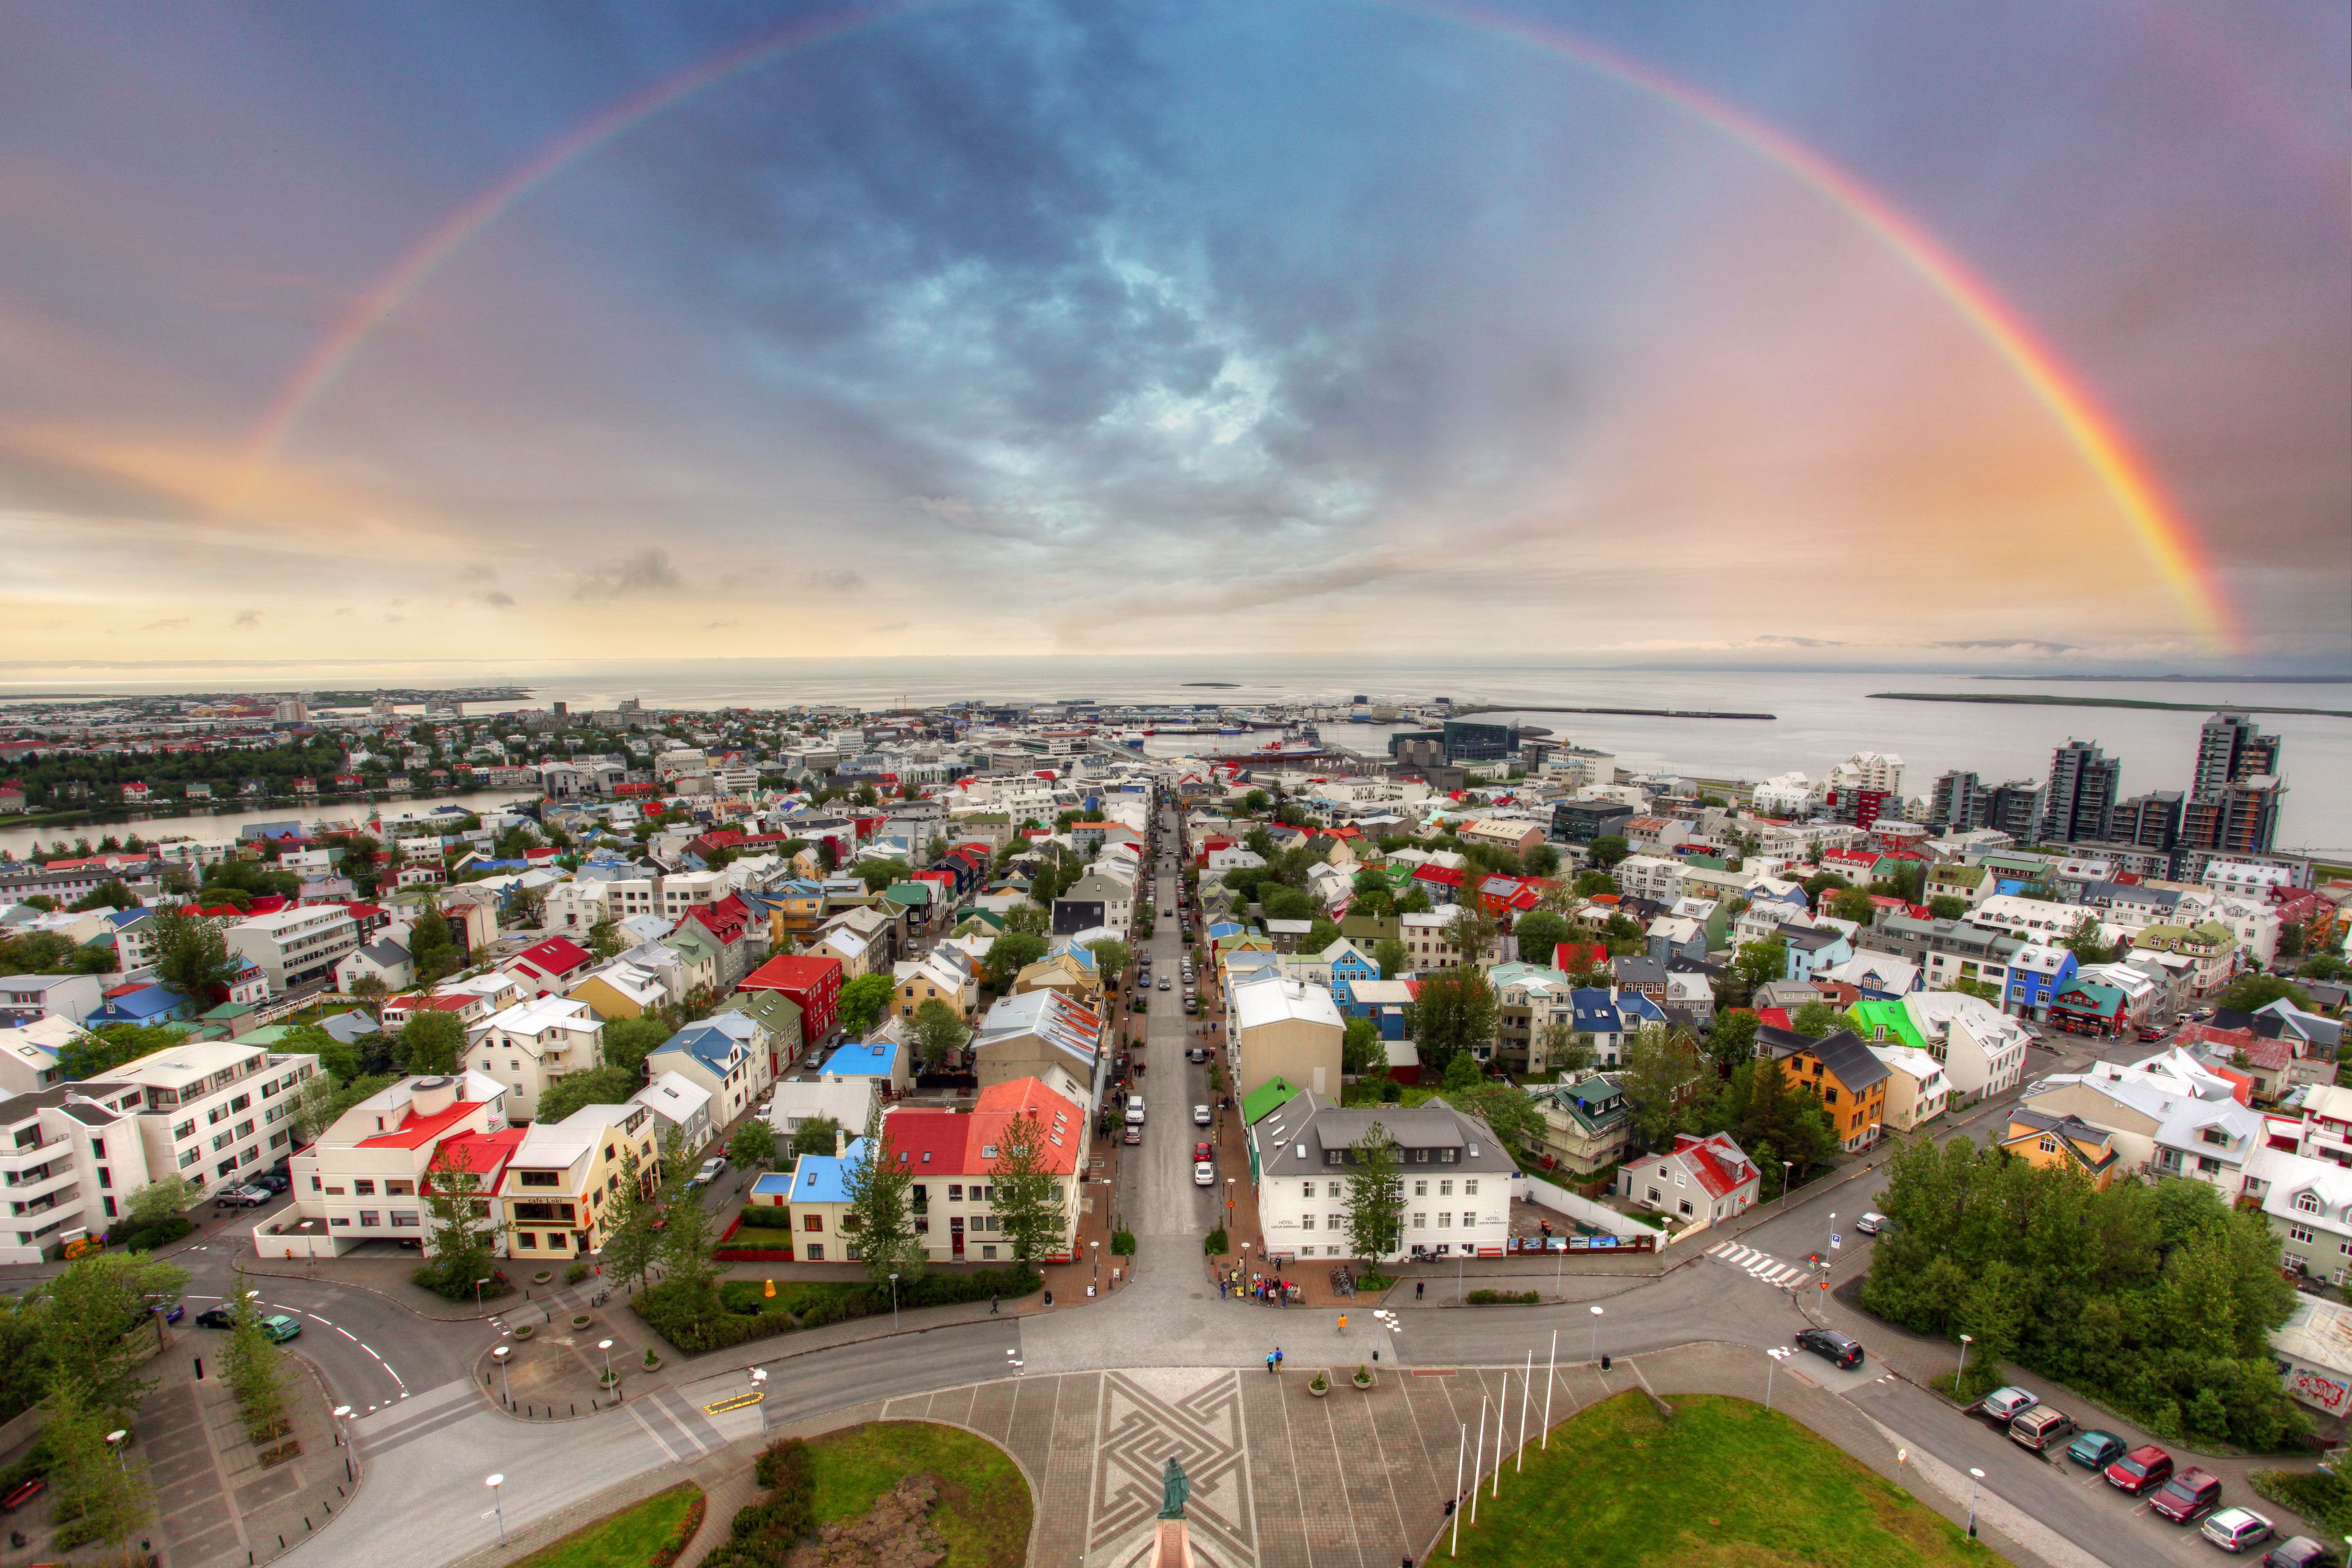 Reykjavik cityspace with rainbow